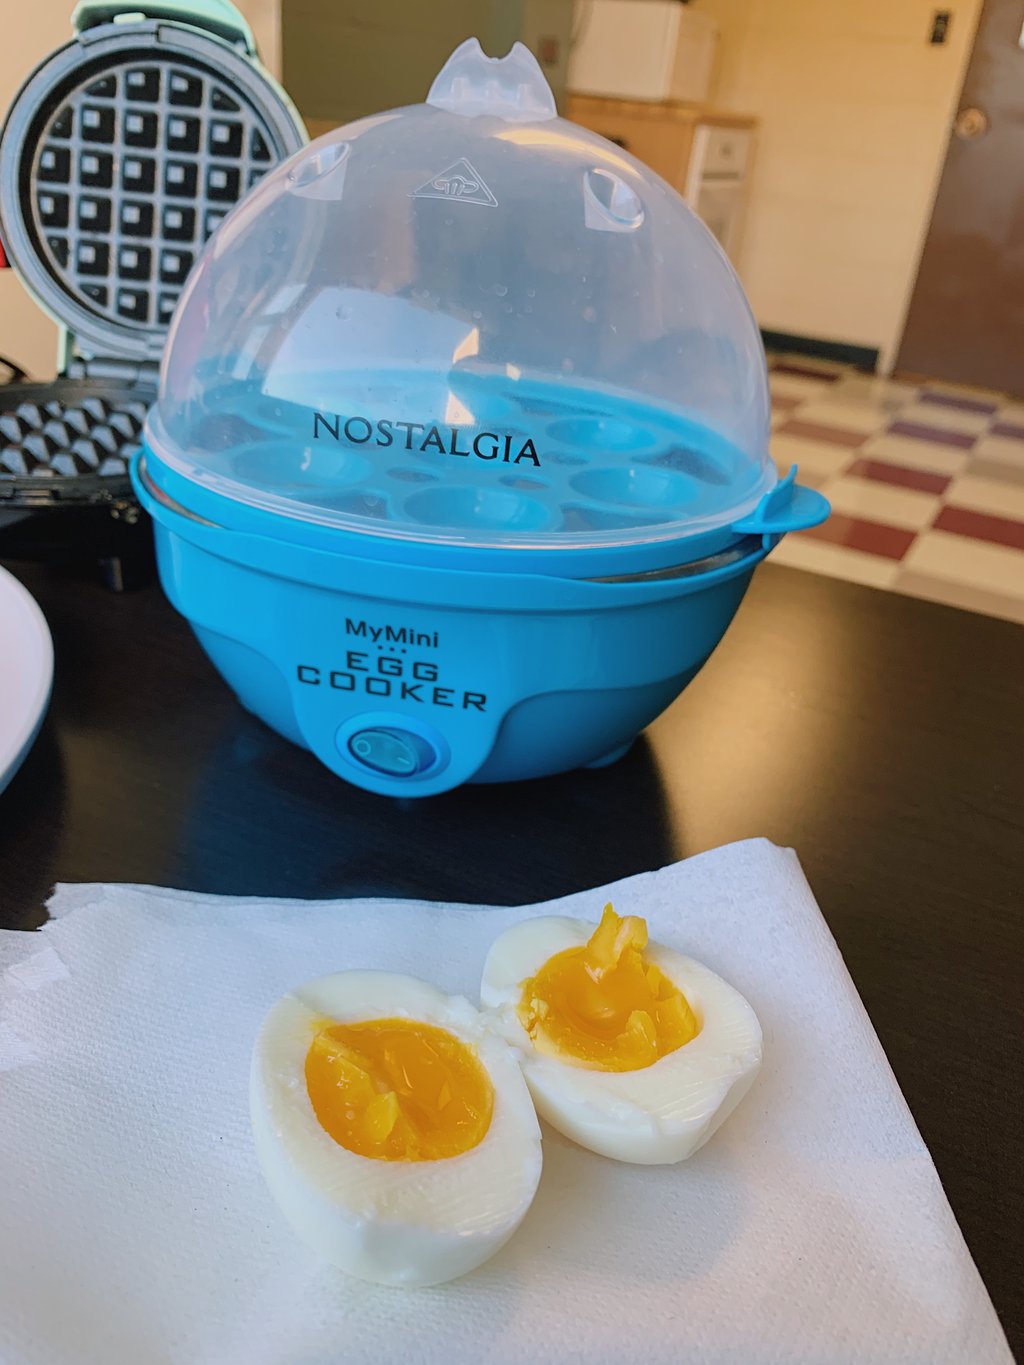 Nostalgia Mini Egg Cooker Teal